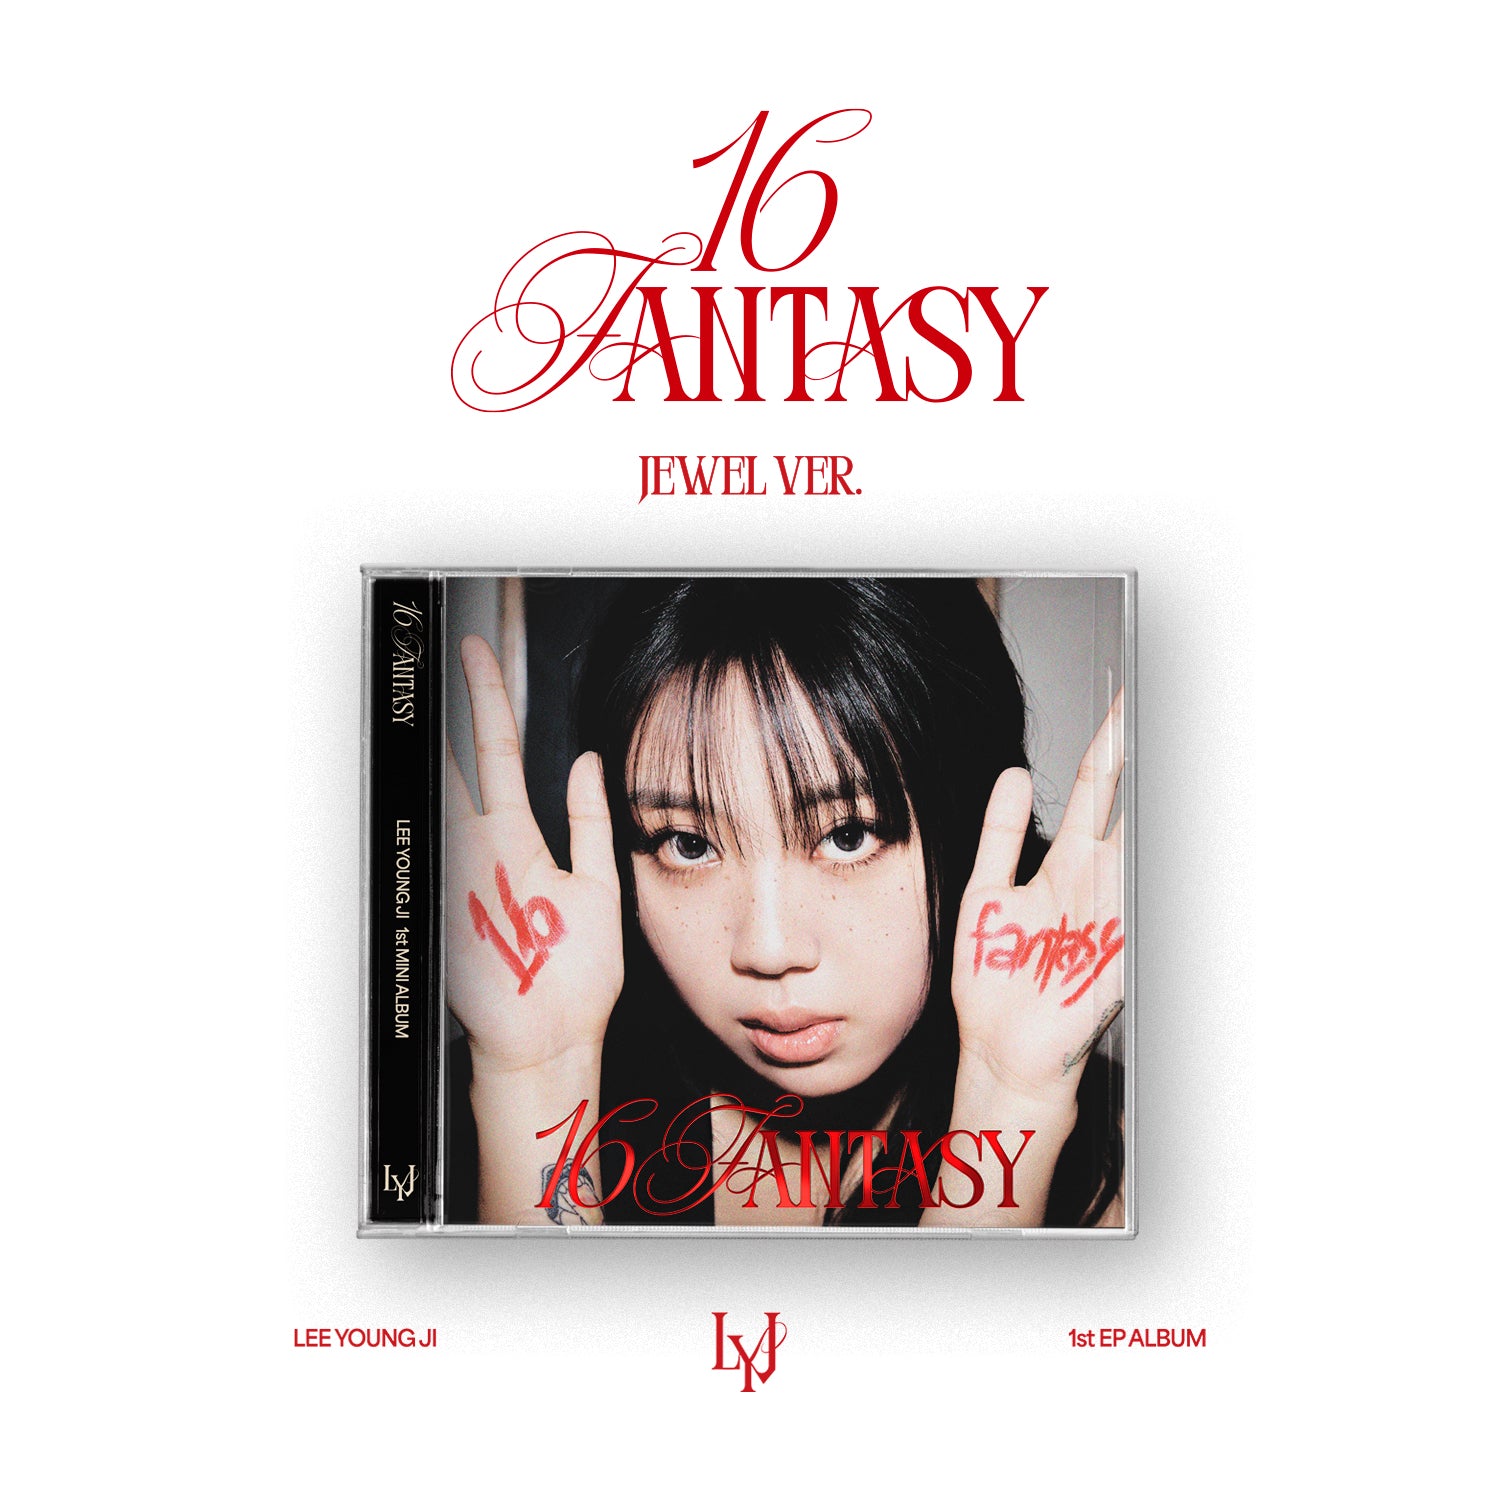 LEE YOUNGJI - 1st Mini Album [16 Fantasy] Jewel Ver.